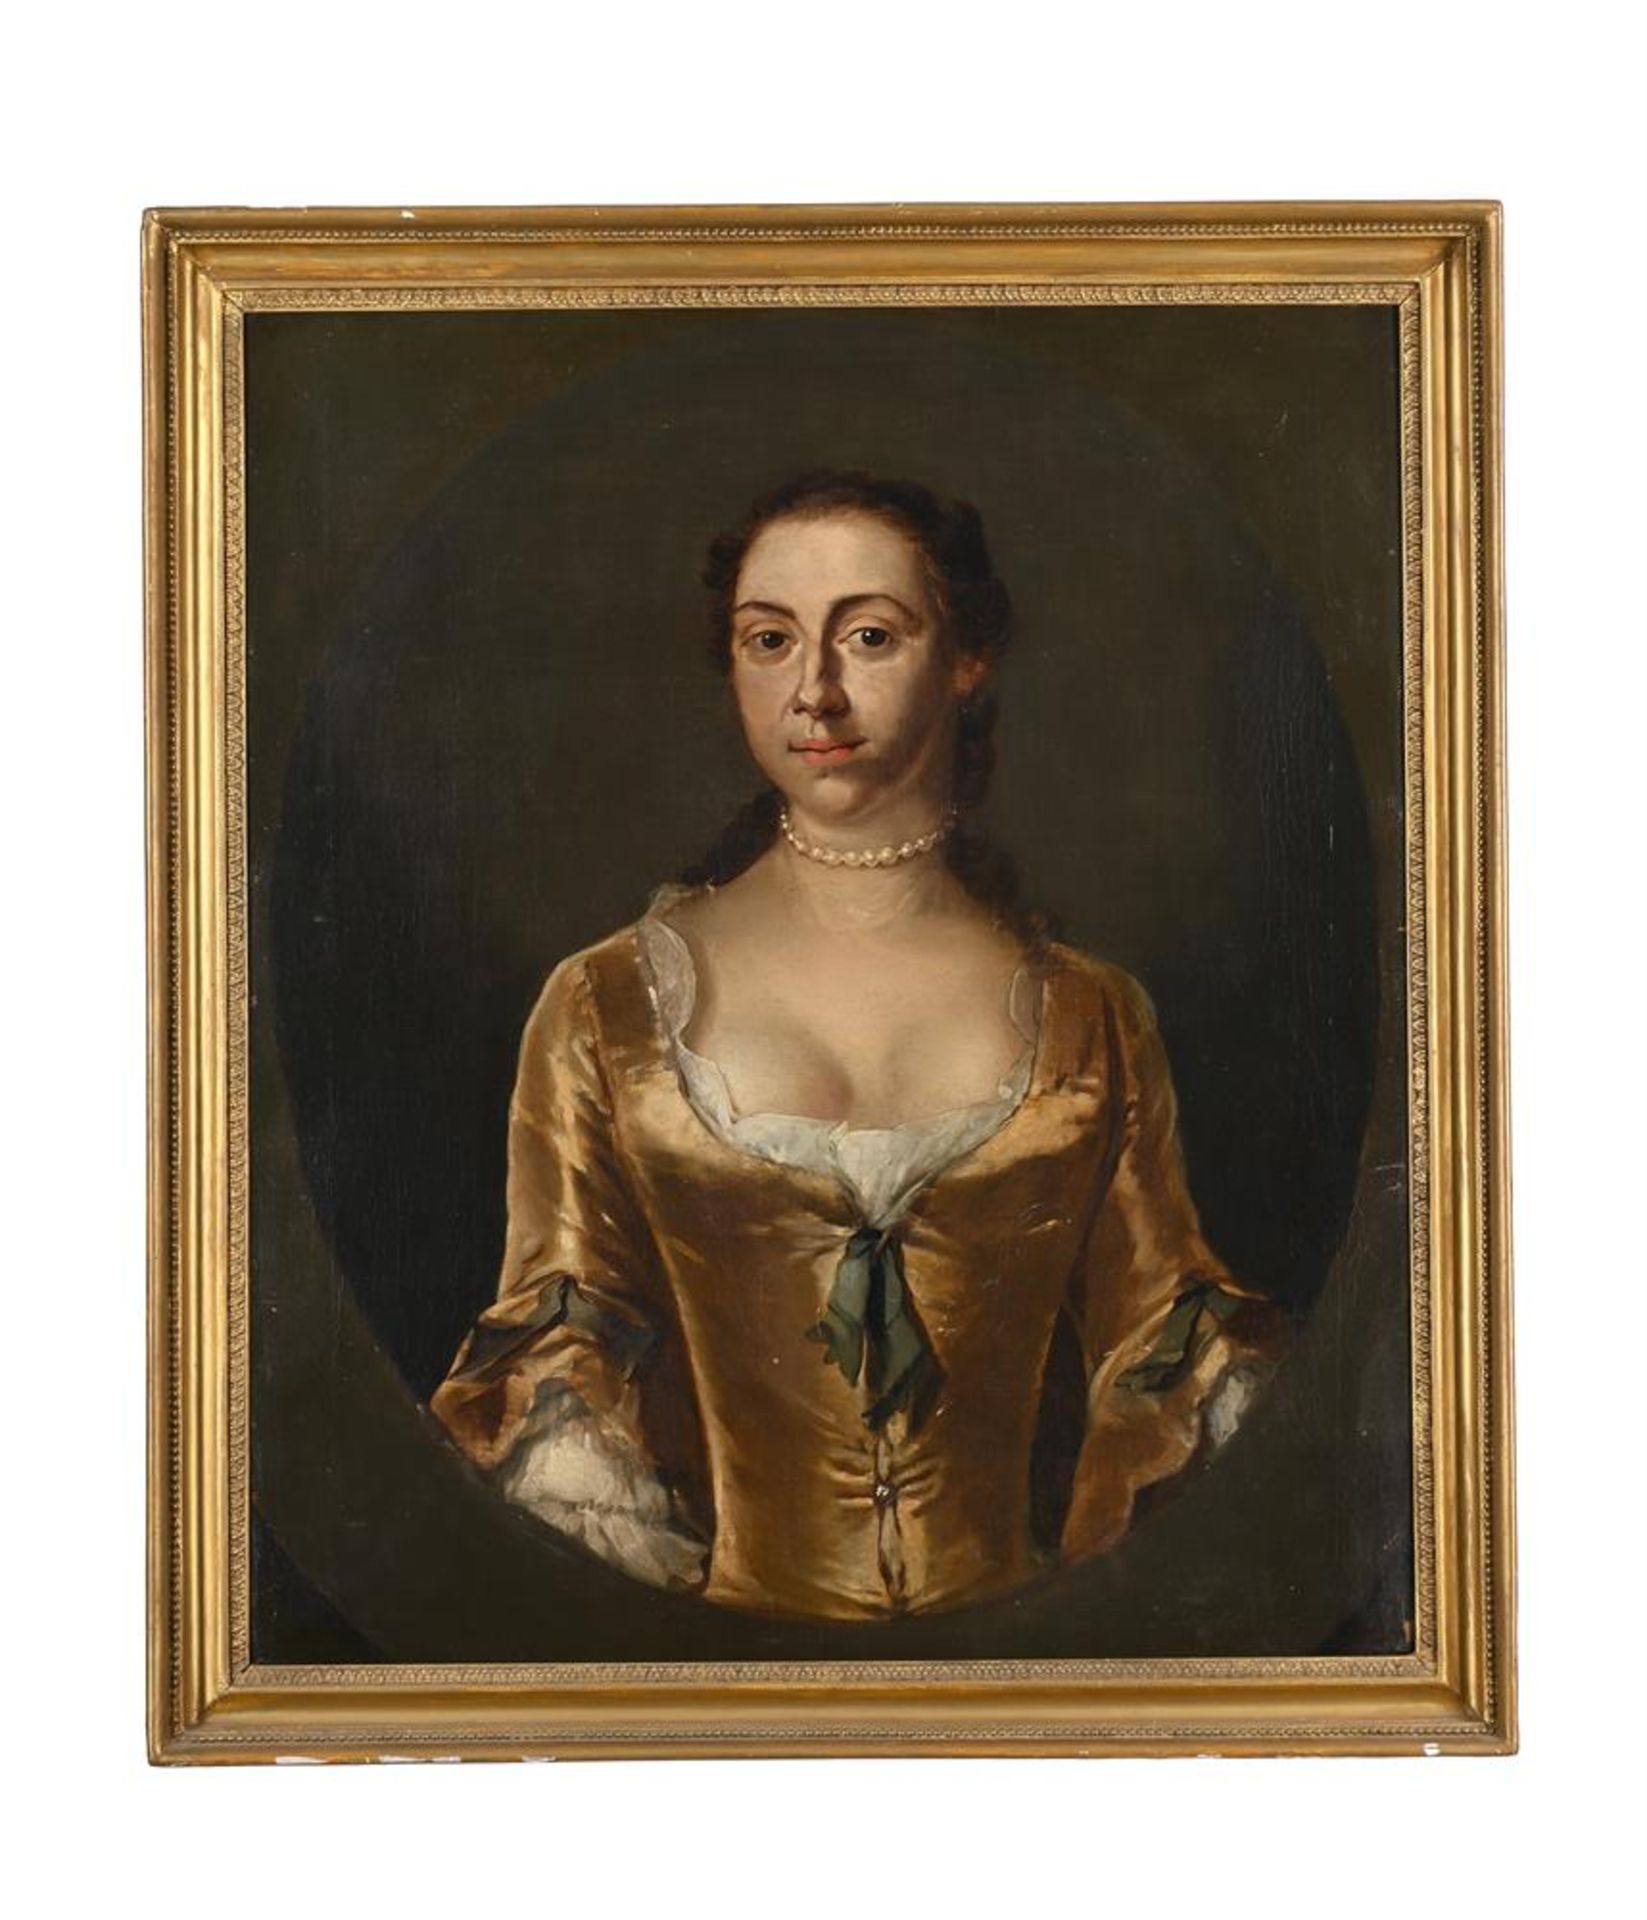 BRITISH SCHOOL (18TH CENTURY), PORTRAIT OF A LADY IN A GOLDEN DRESS